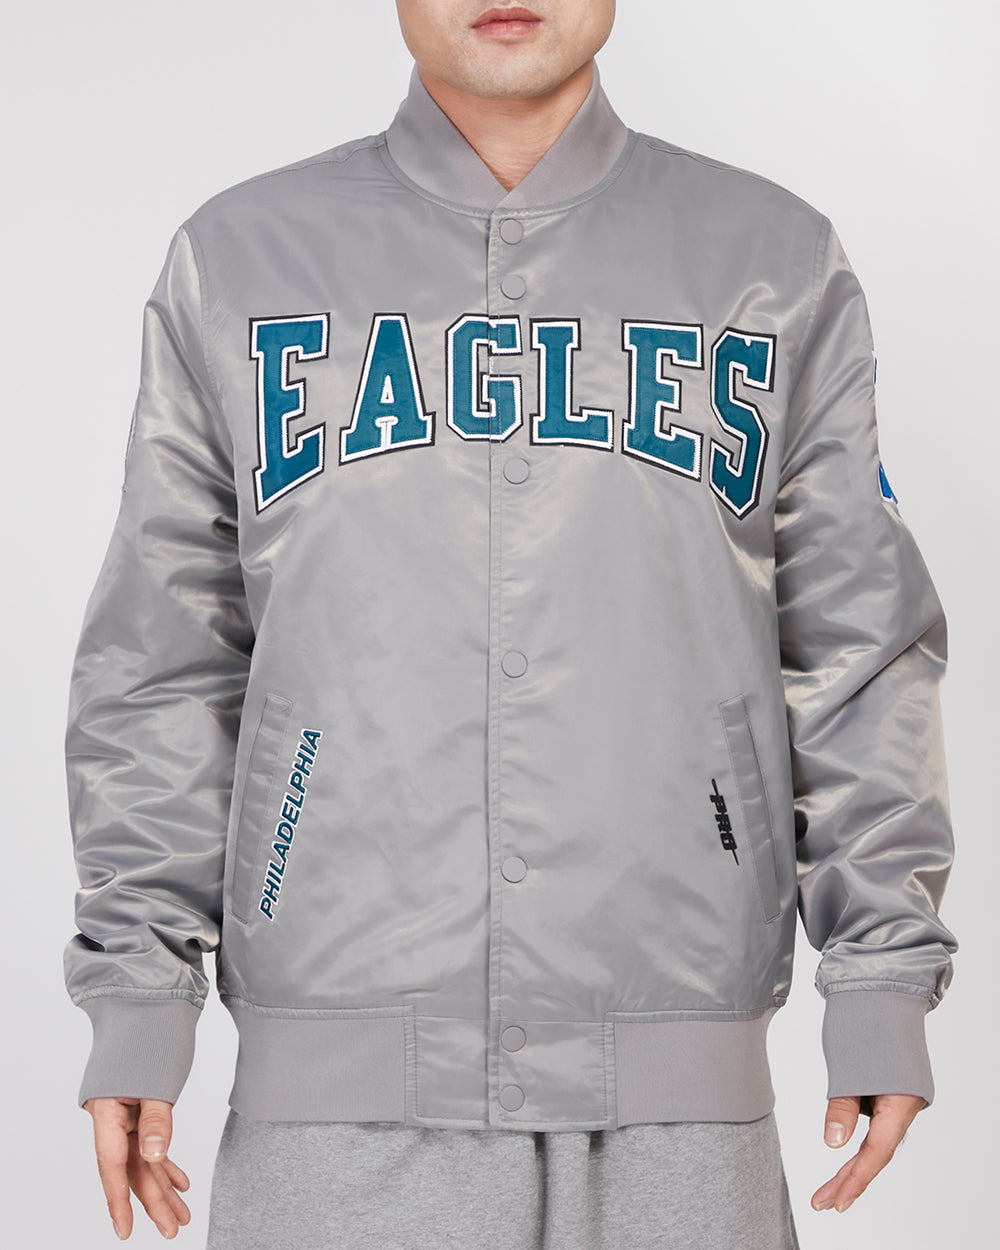 Philadelphia Eagles Satin Jacket - Eagles Starter Jacket